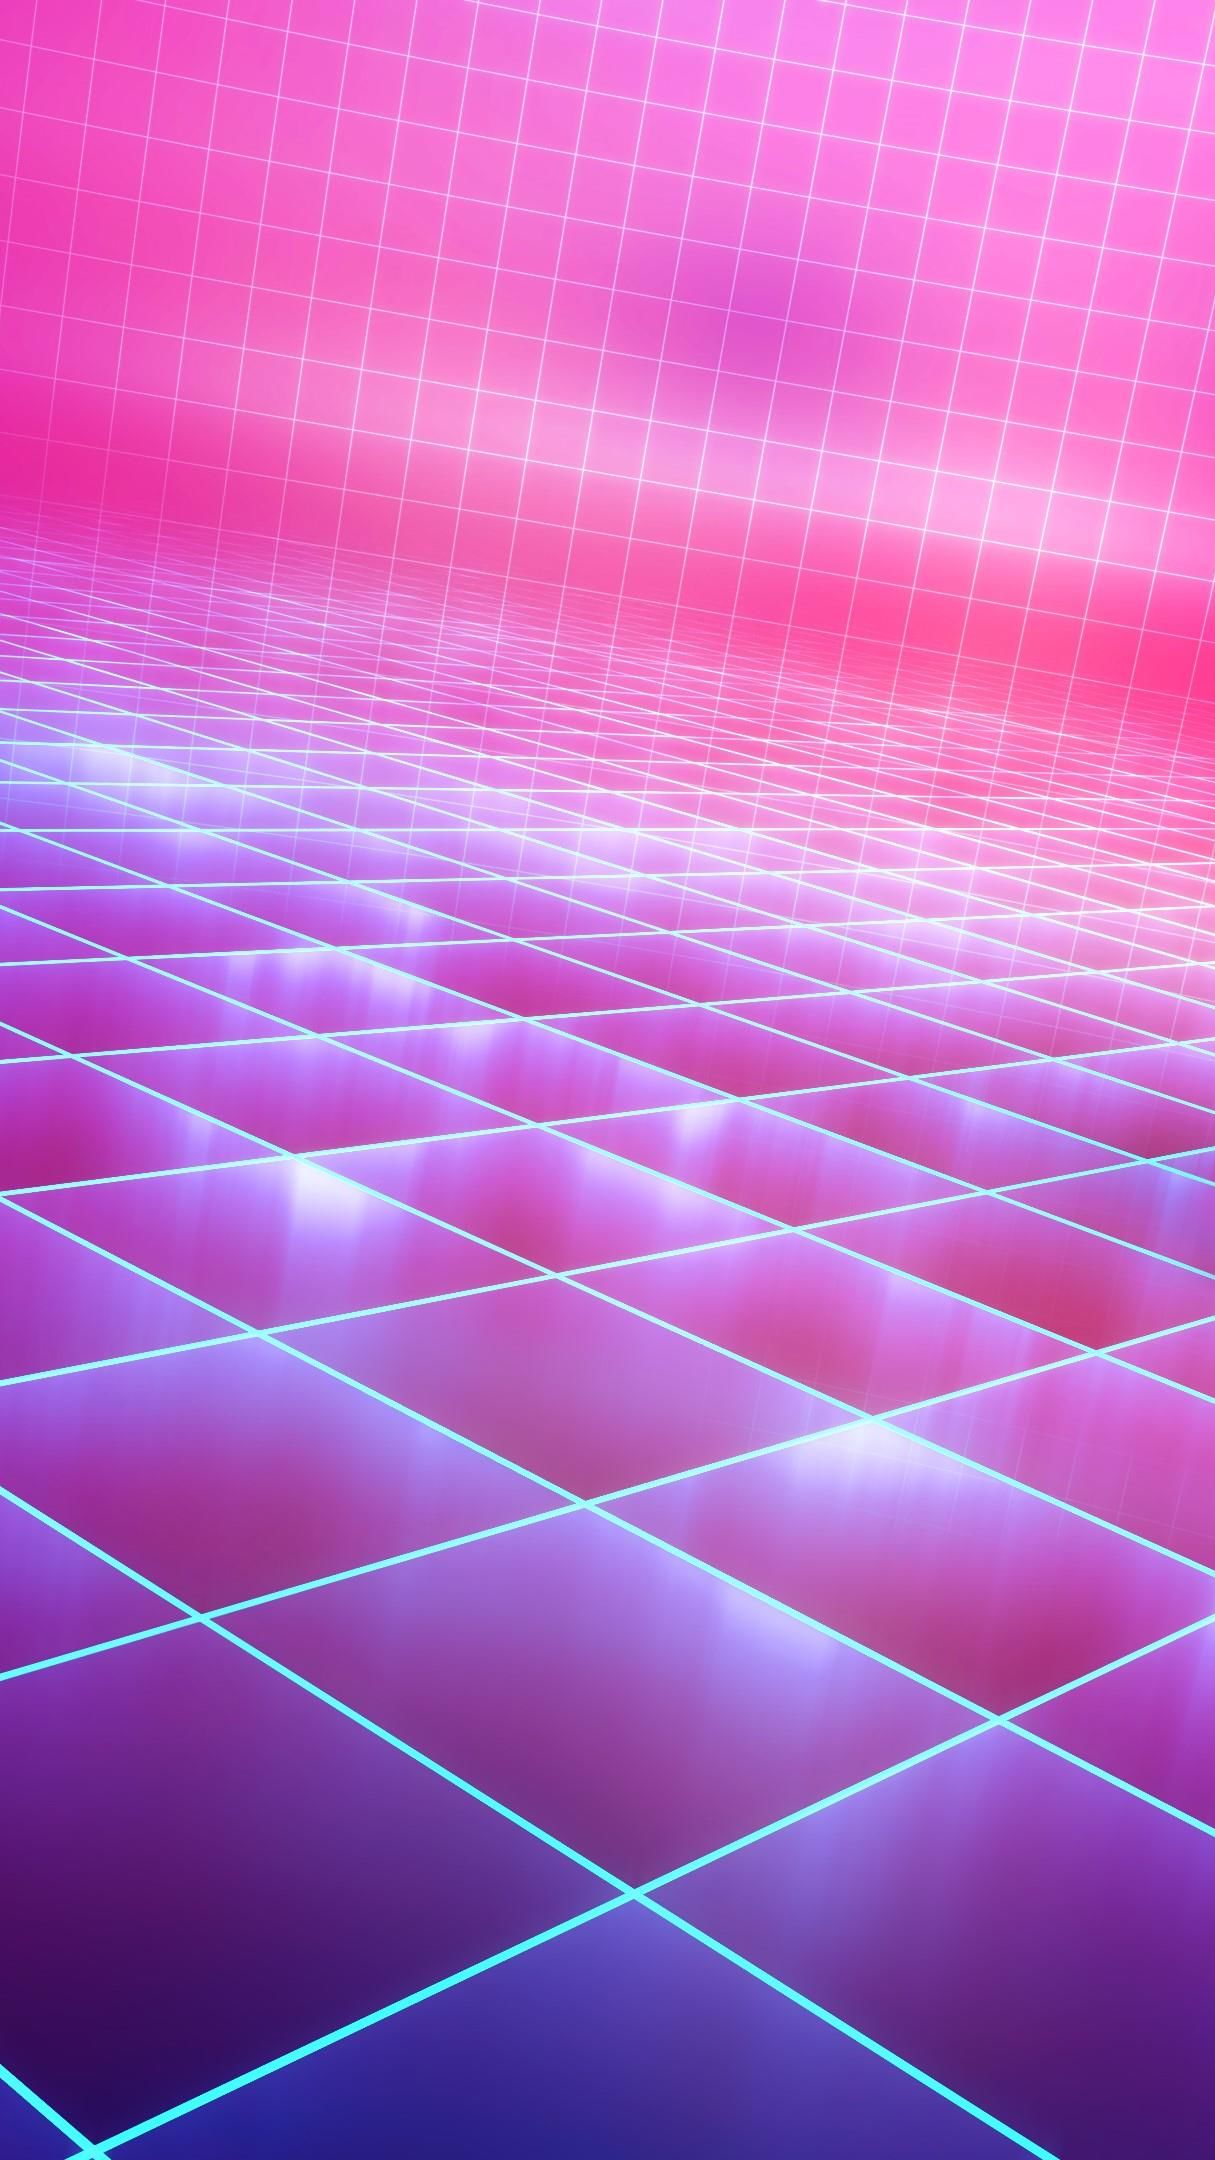 Neon grid - Retrofuture digital art wallpaper - backiee